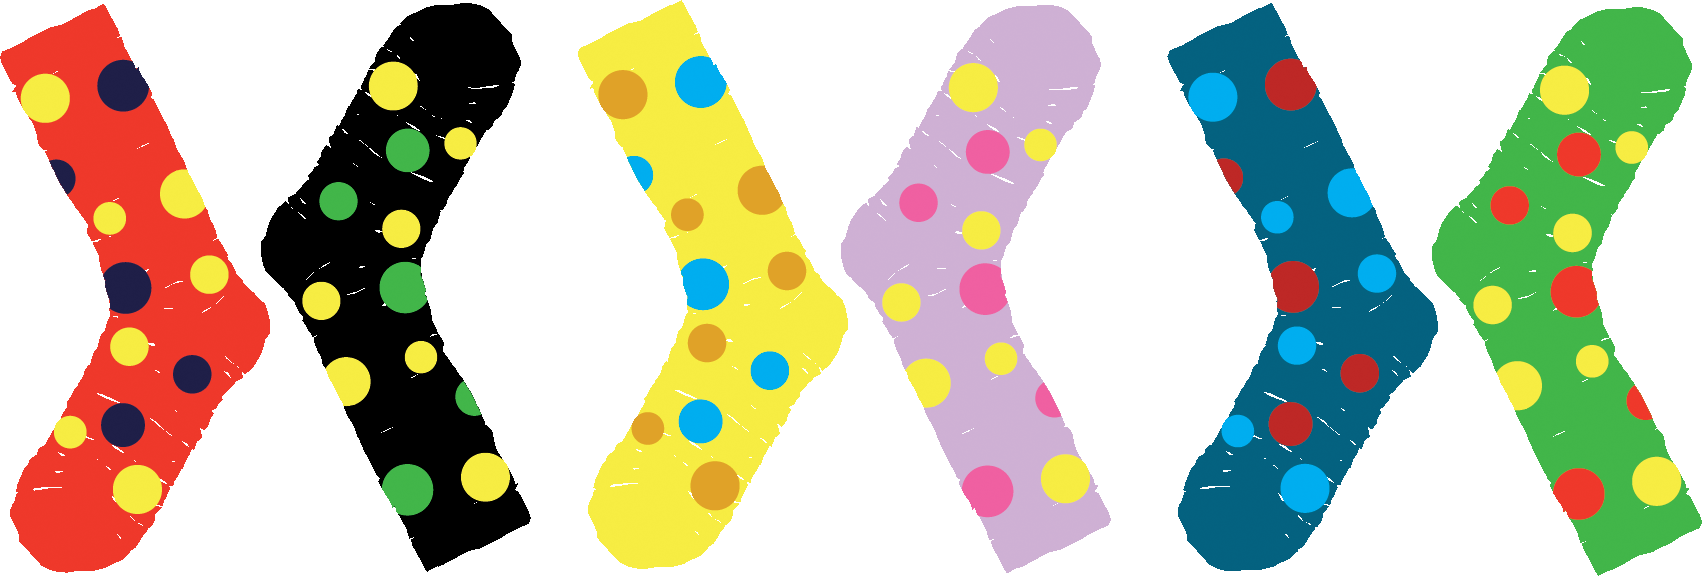 2015_socks_logo.png